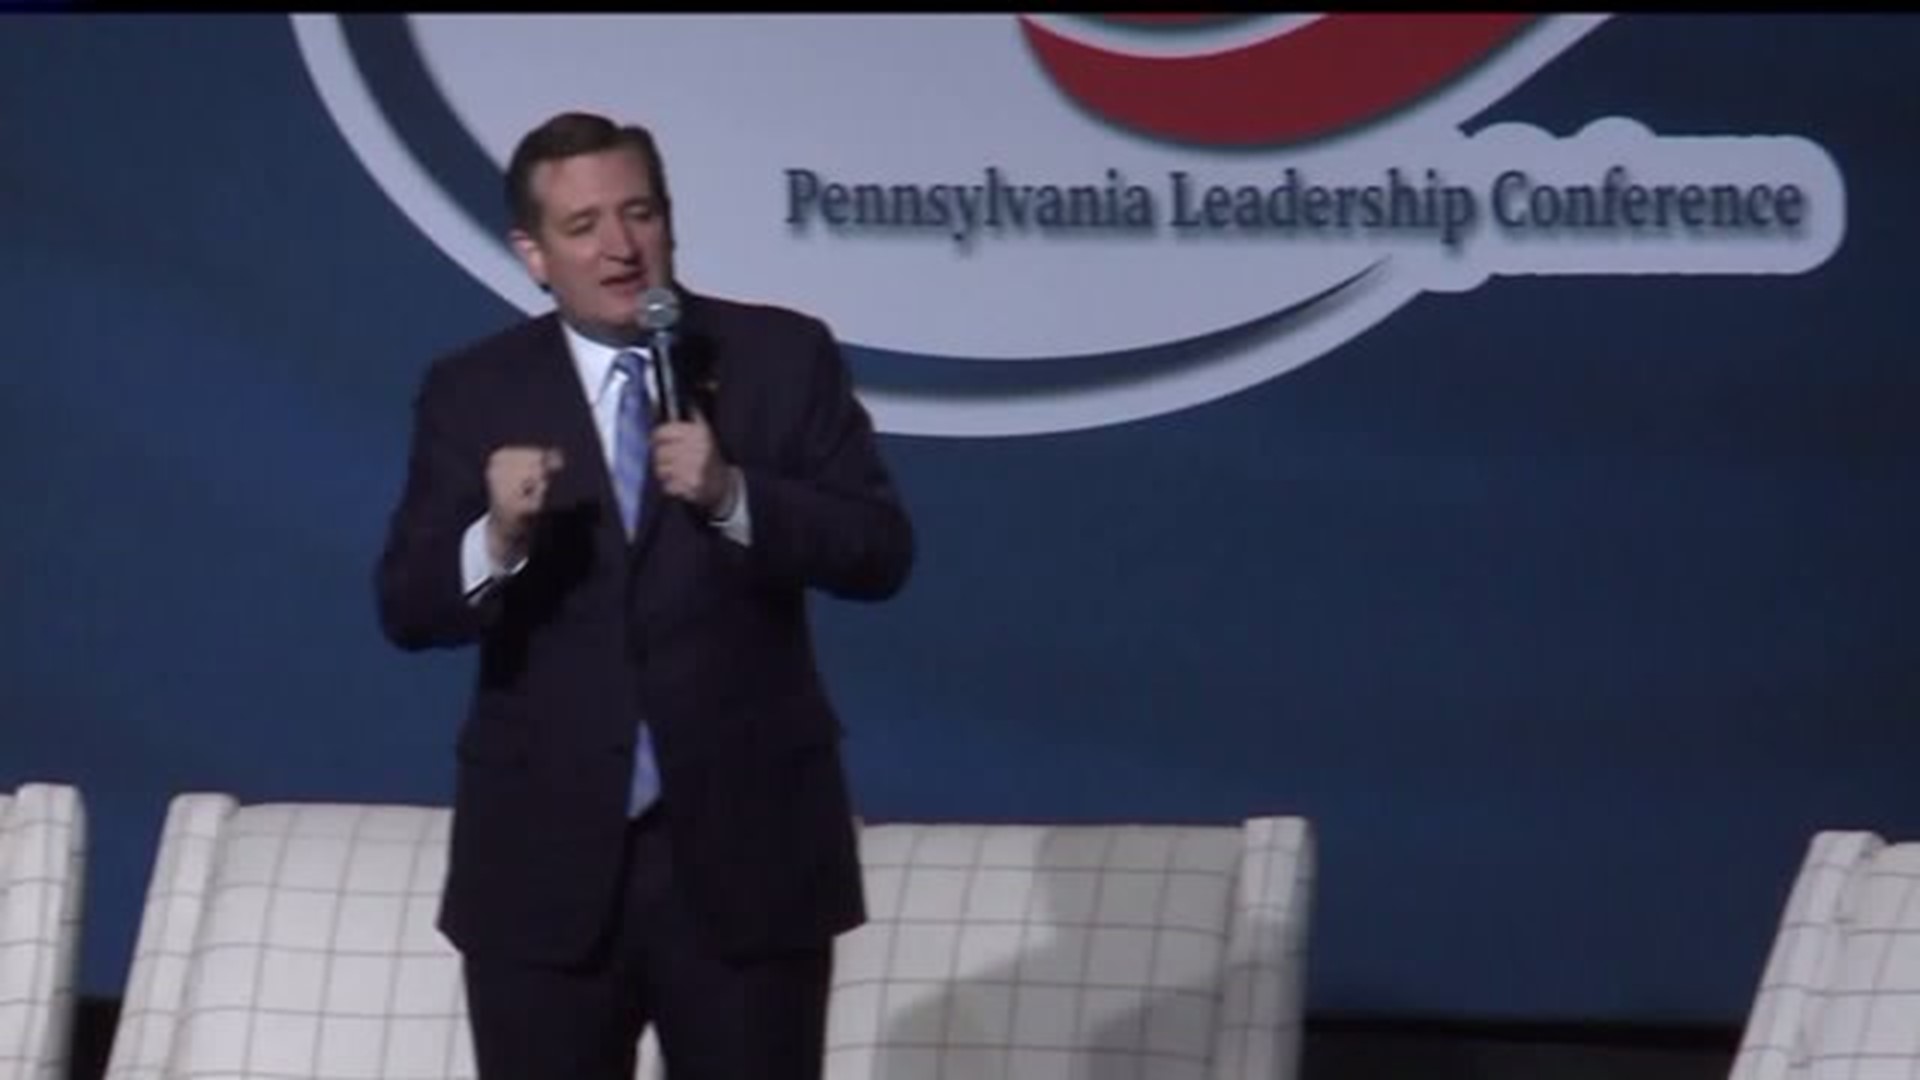 Ted Cruz addresses Pennsylvania Leadership Conference